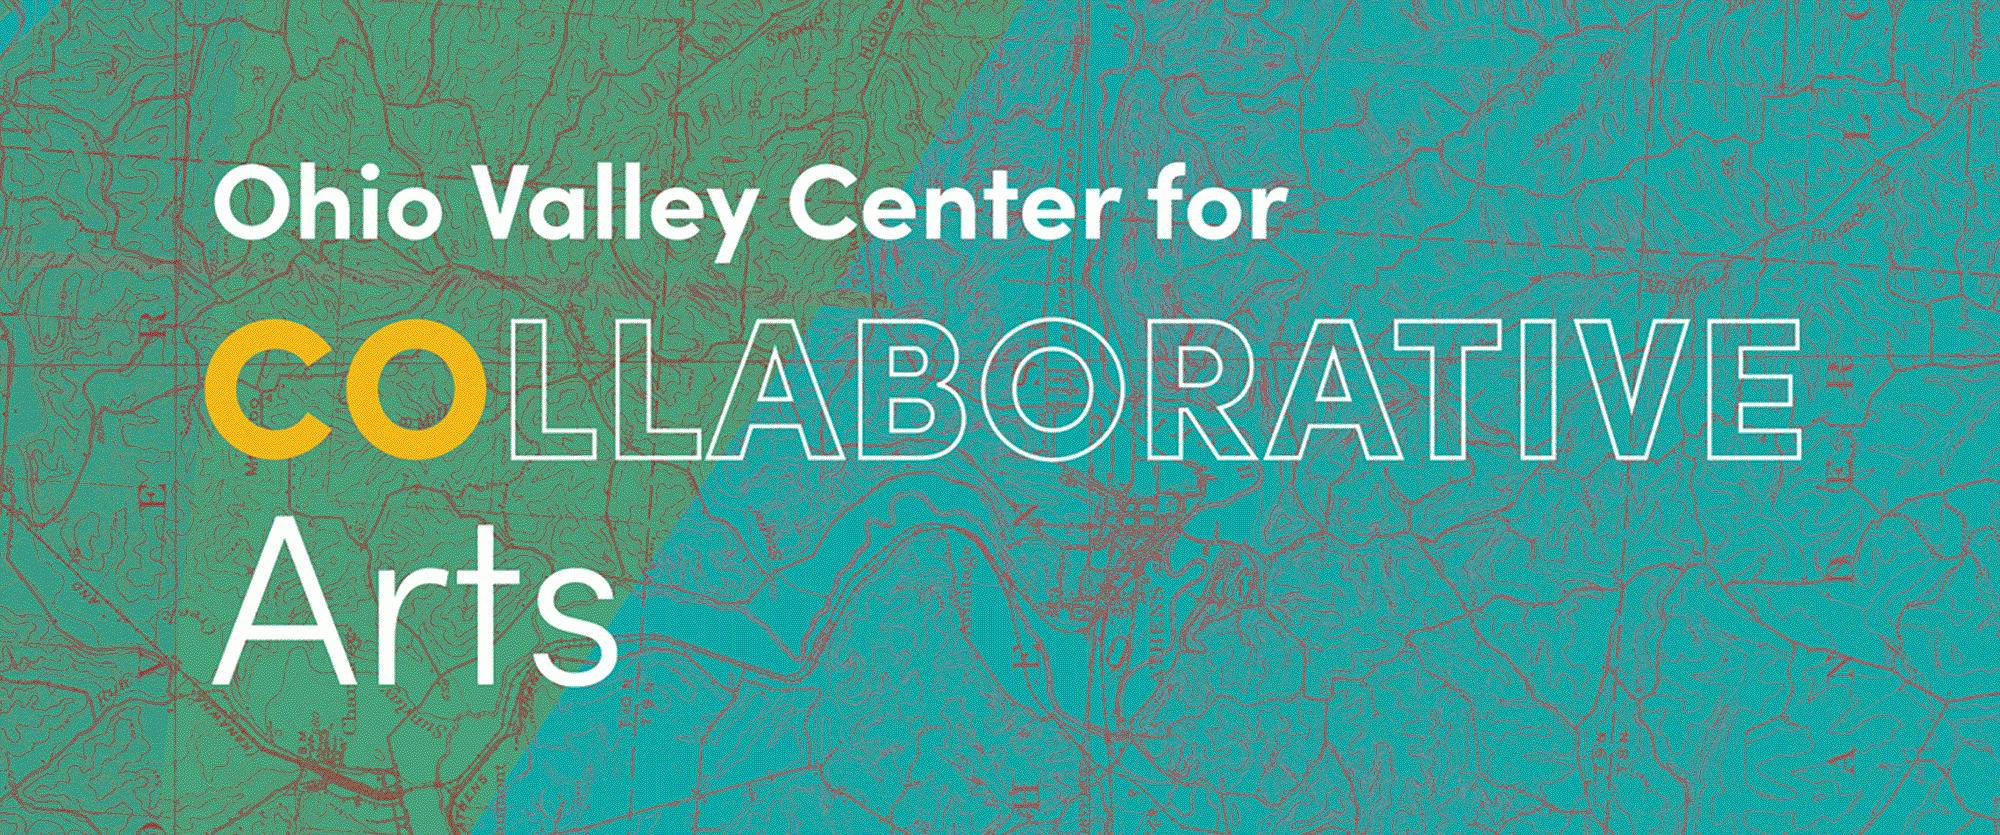 Ohio Valley Center for Collaborate Arts